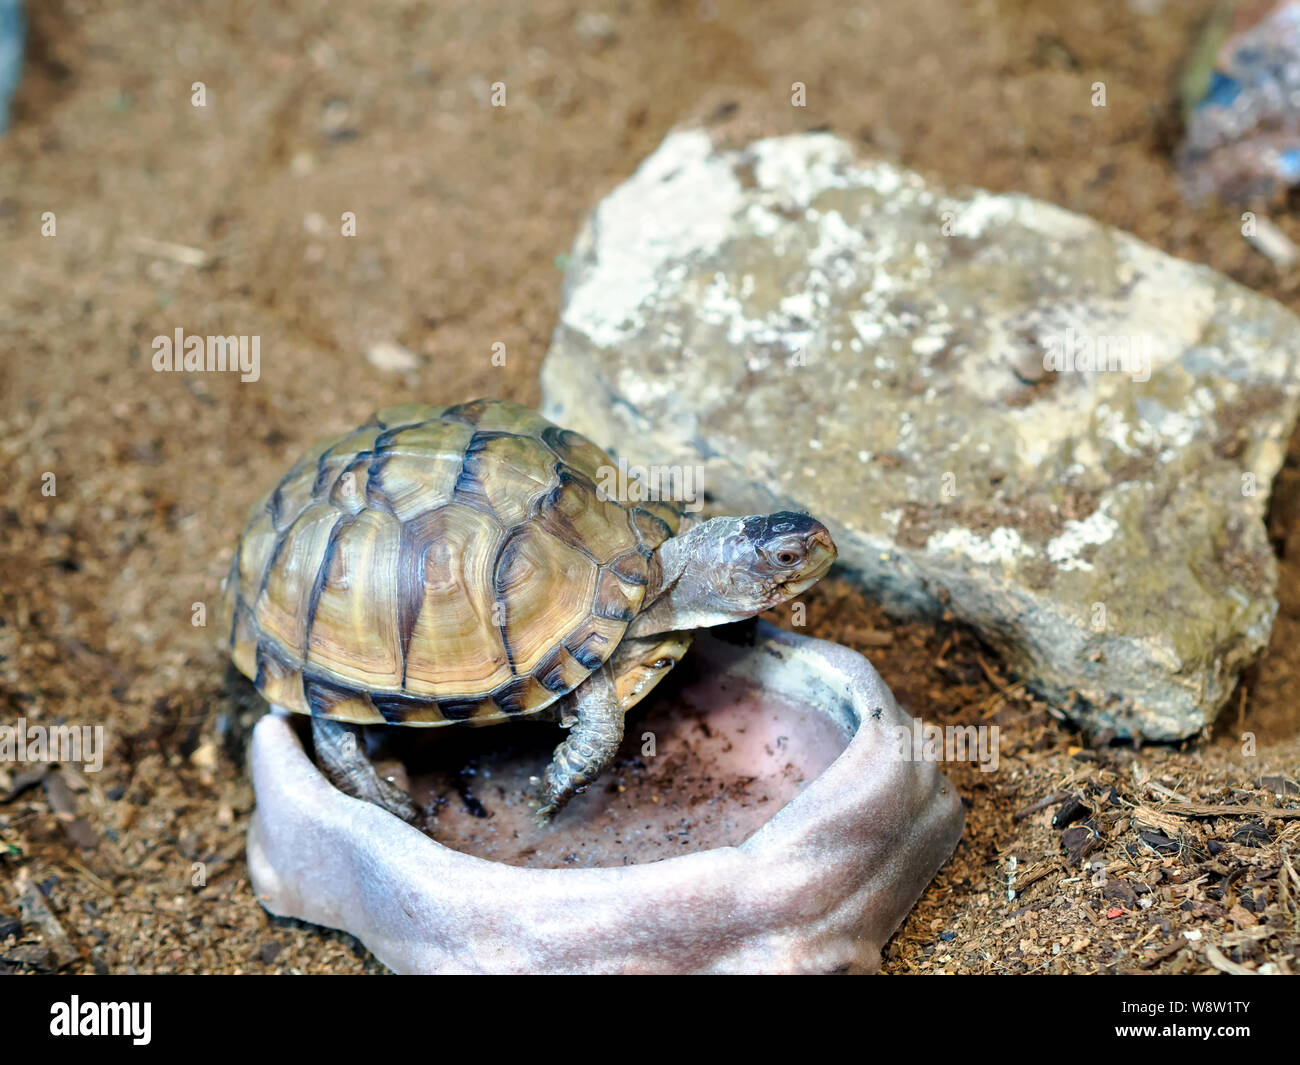 Ornate box turtle, Terrapene ornata ornata, climbing into a water dish. South Texas Botanical Gardens & Nature Center in Corpus Christi, Texas USA. Stock Photo